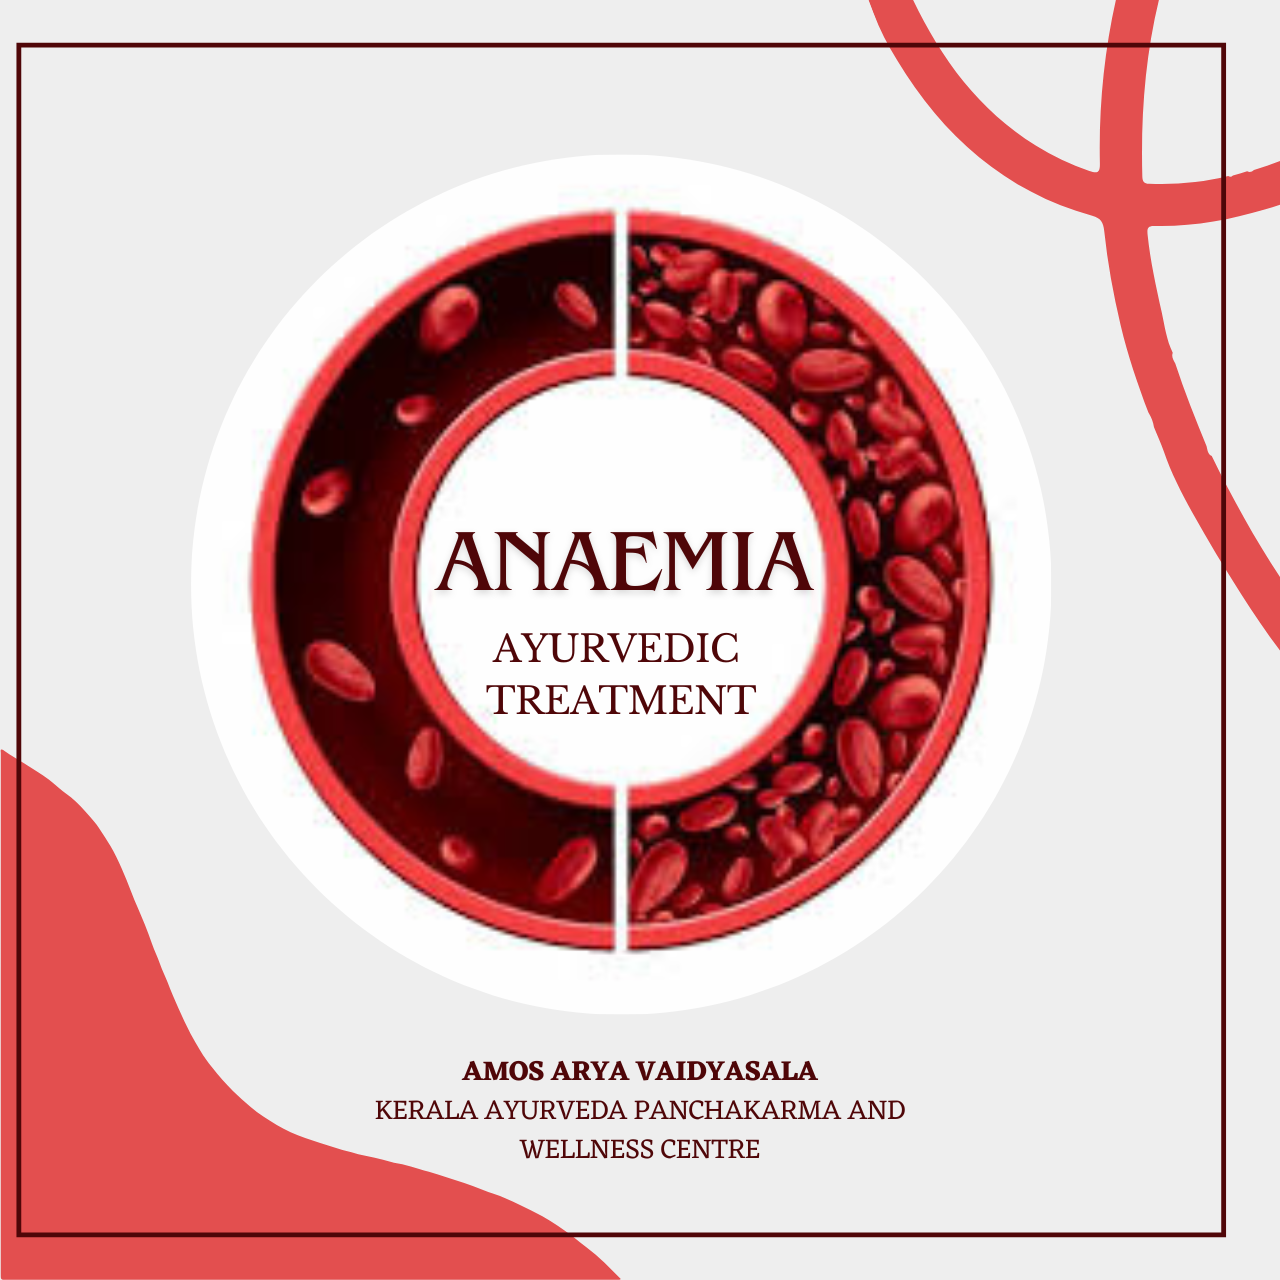 Anaemia Treatment in ayurveda 